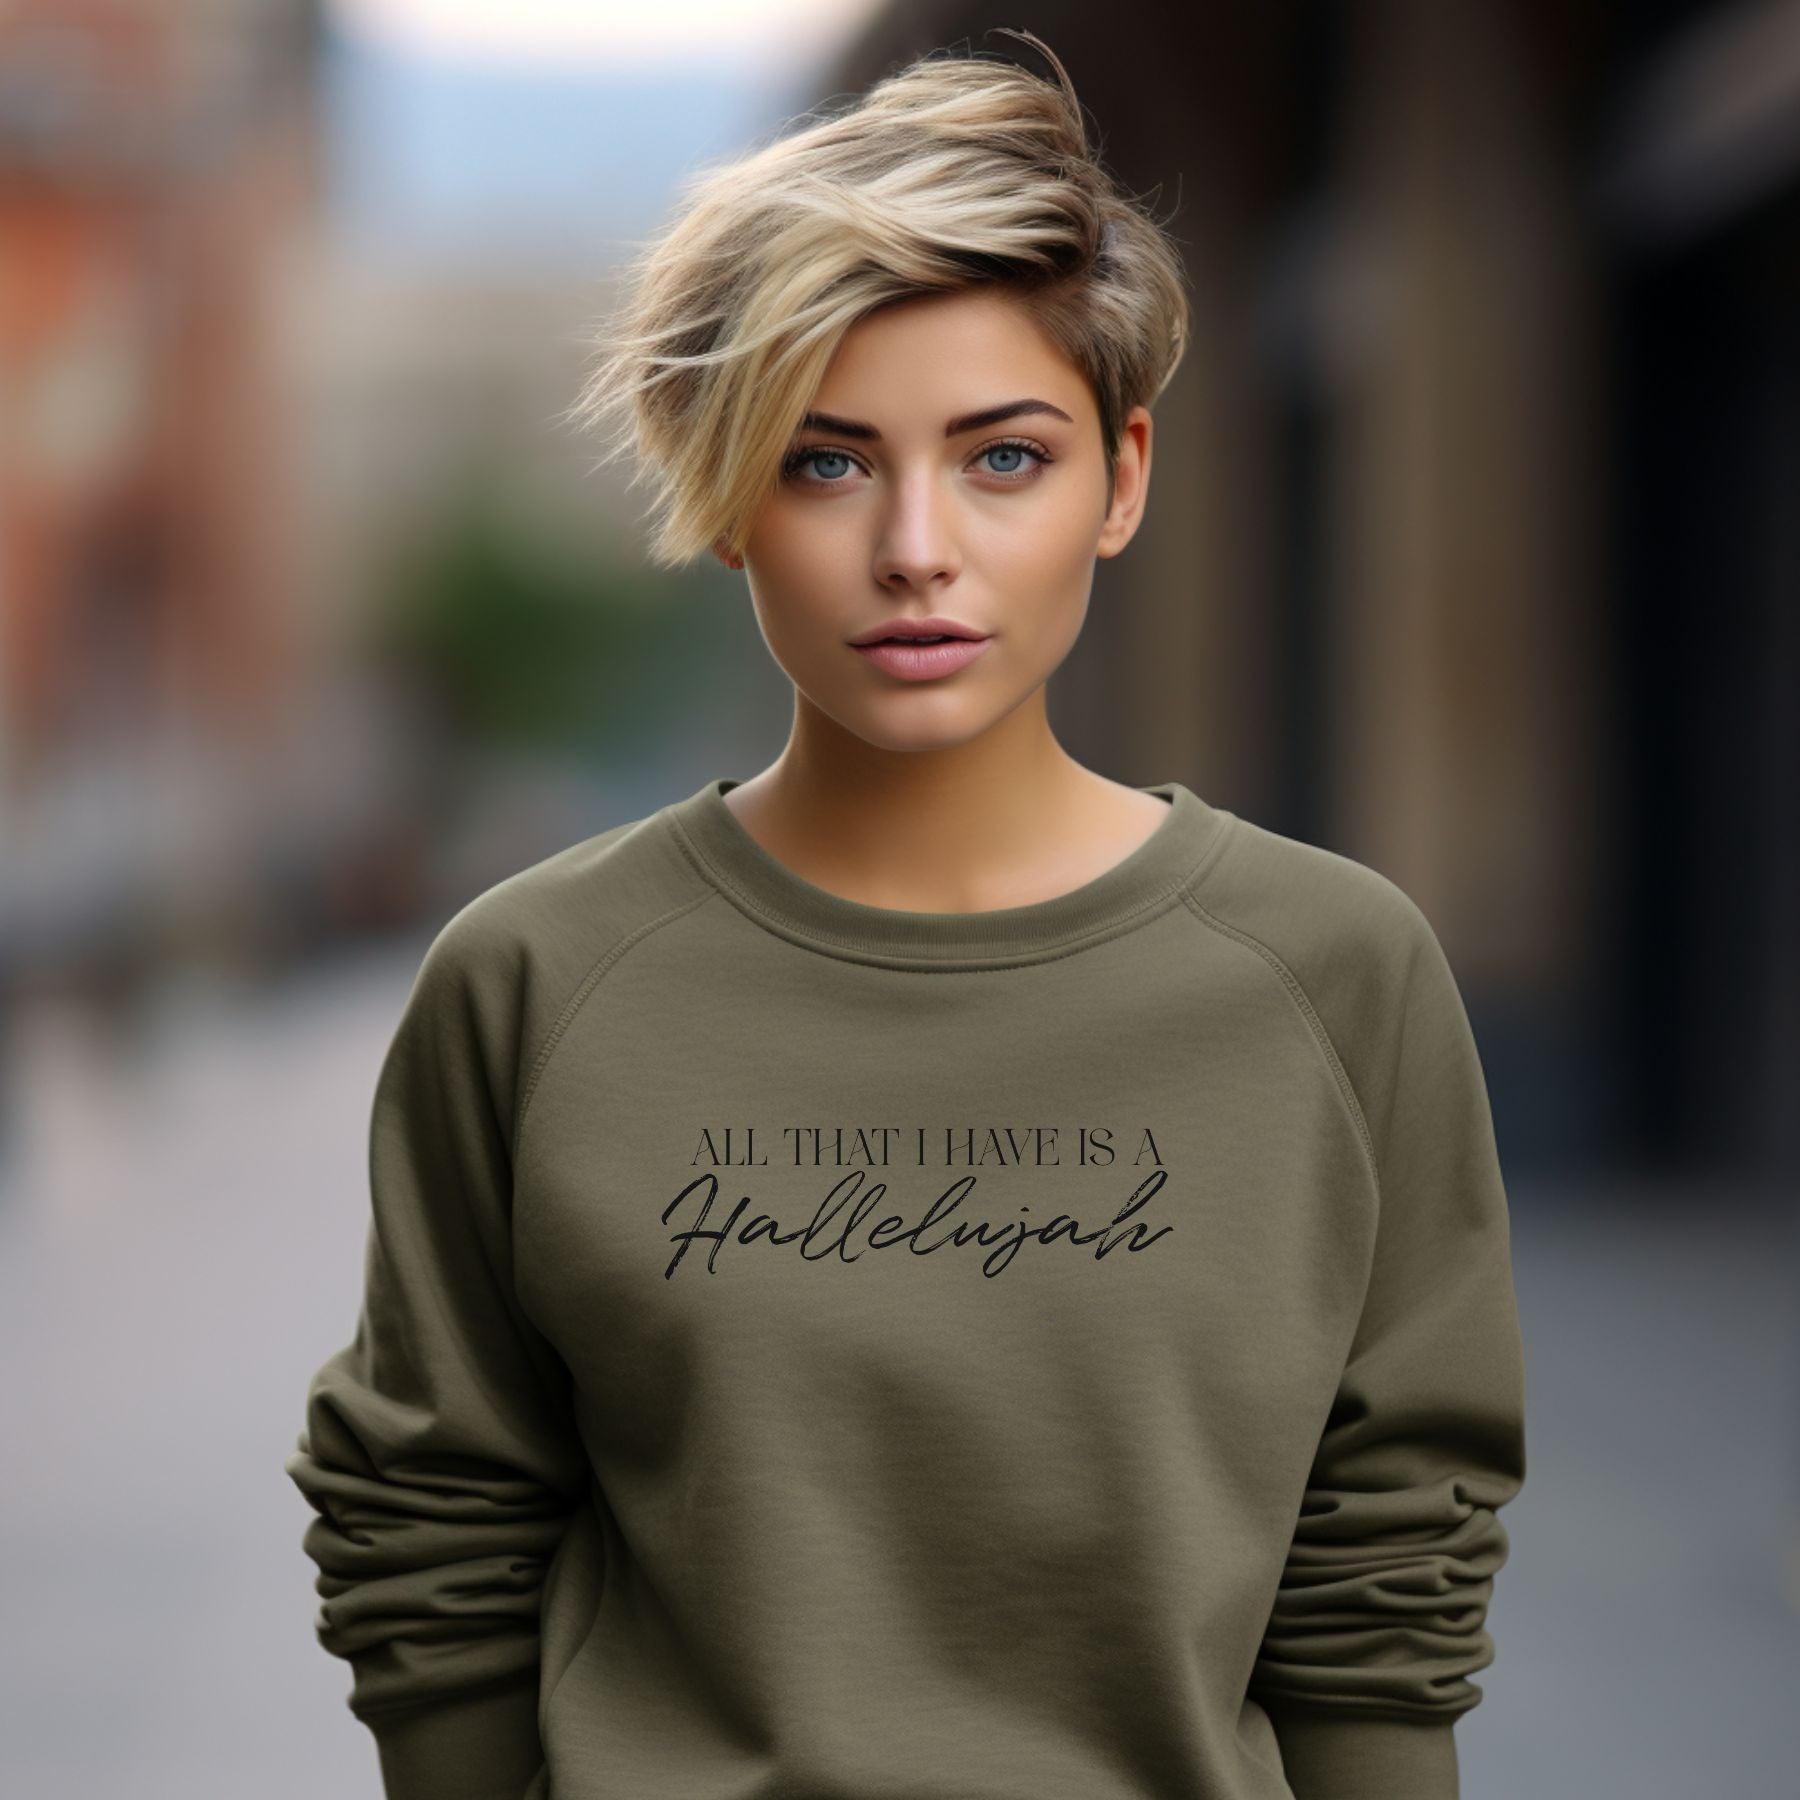 All That I Have Is A Hallelujah Women’s Unisex Sweatshirt - JT Footprint Apparel